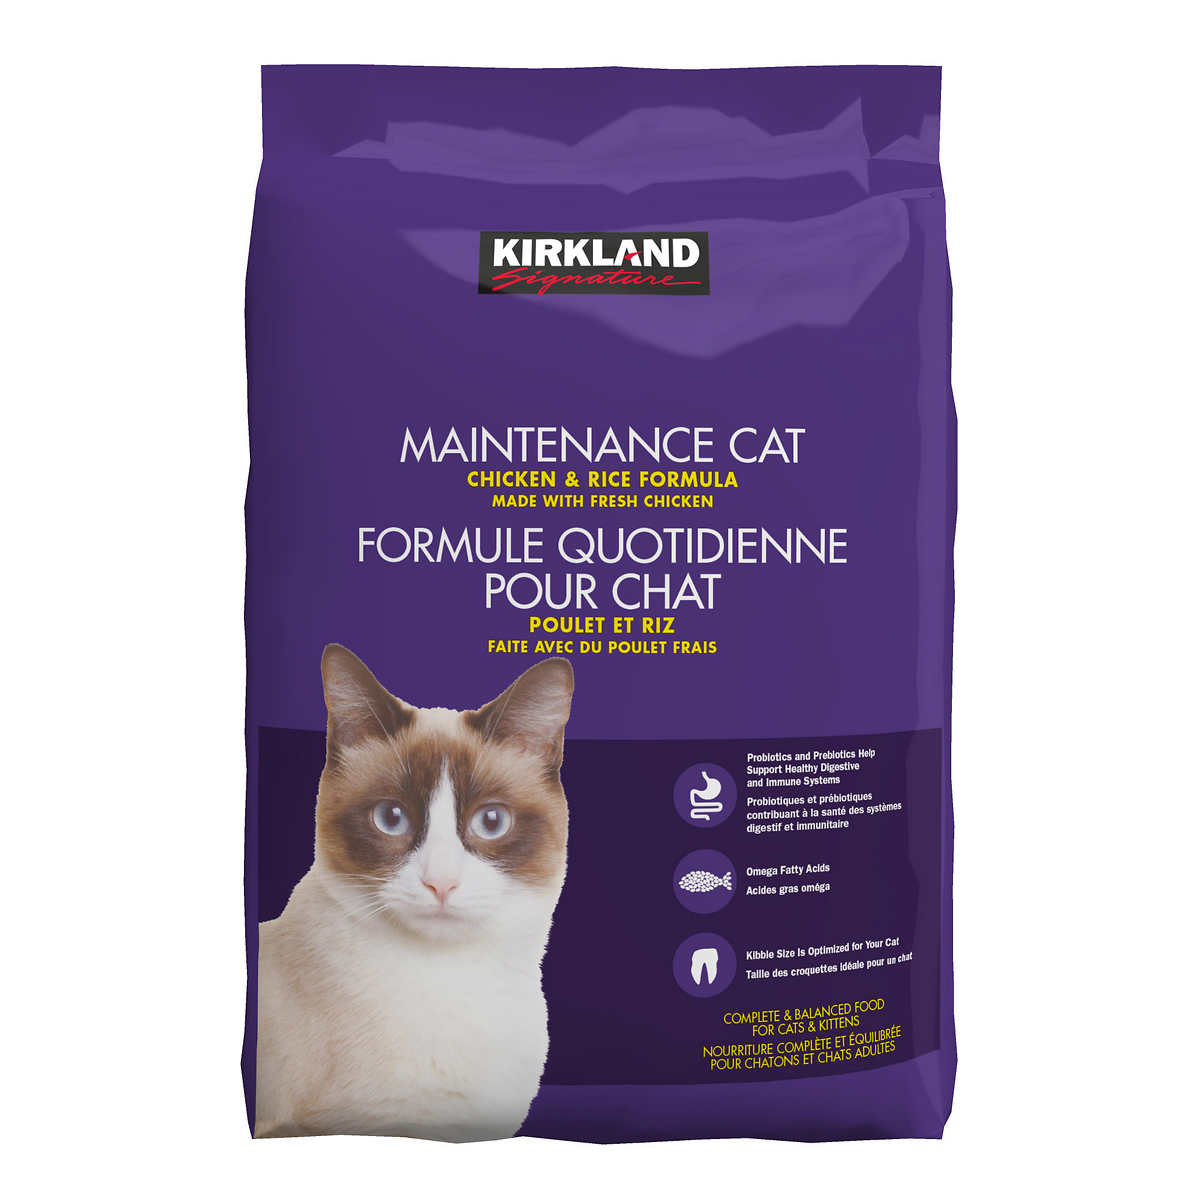 Kirkland Cat Food Nutritional Information Besto Blog